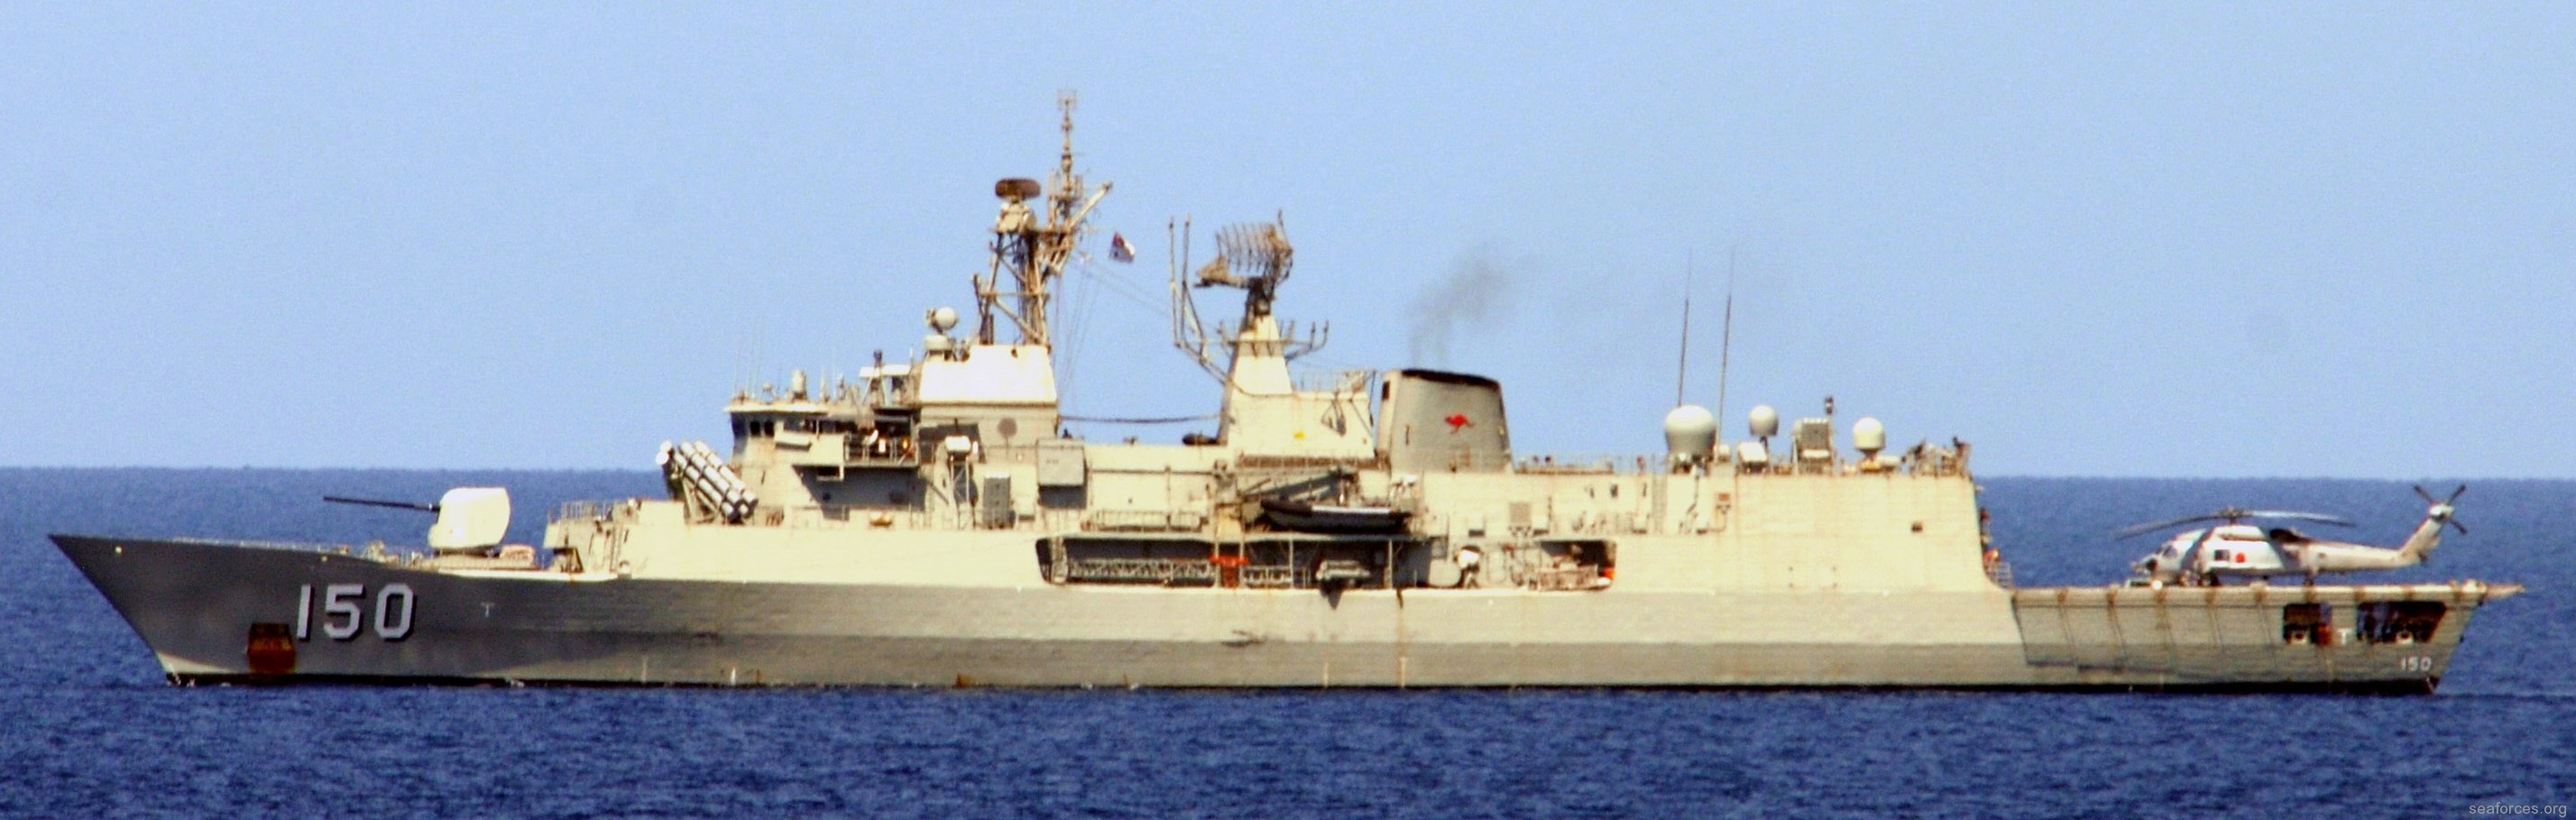 ffh-150 hmas anzac frigate royal australian navy 03